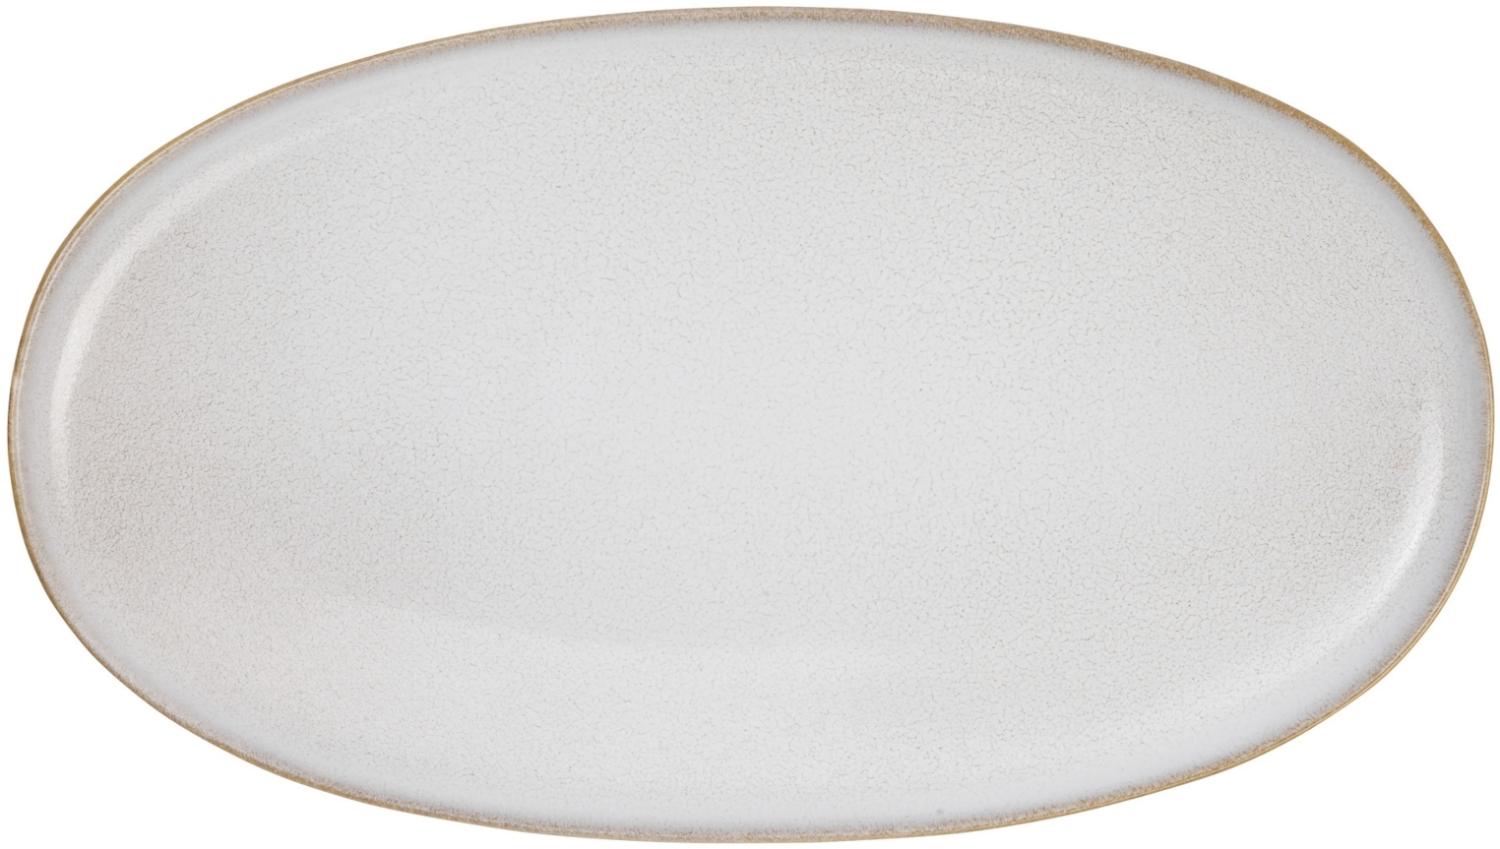 ASA Selection Platte oval Sand, Servierplatte, Steinzeug, Nude, 28. 5 x 16 cm, 27200107 Bild 1